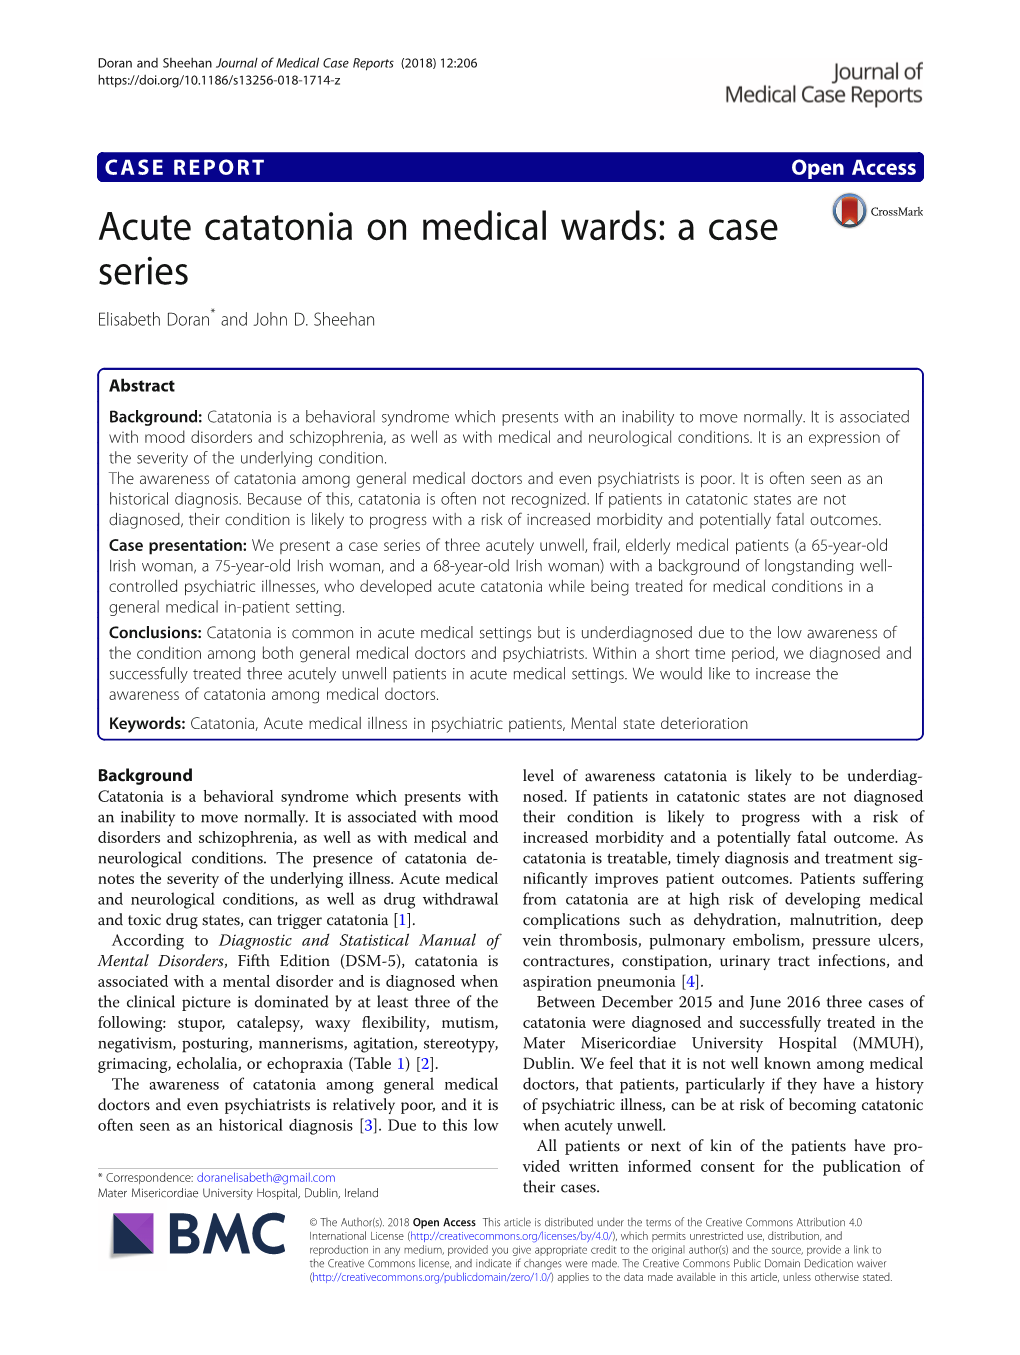 Acute Catatonia on Medical Wards: a Case Series Elisabeth Doran* and John D